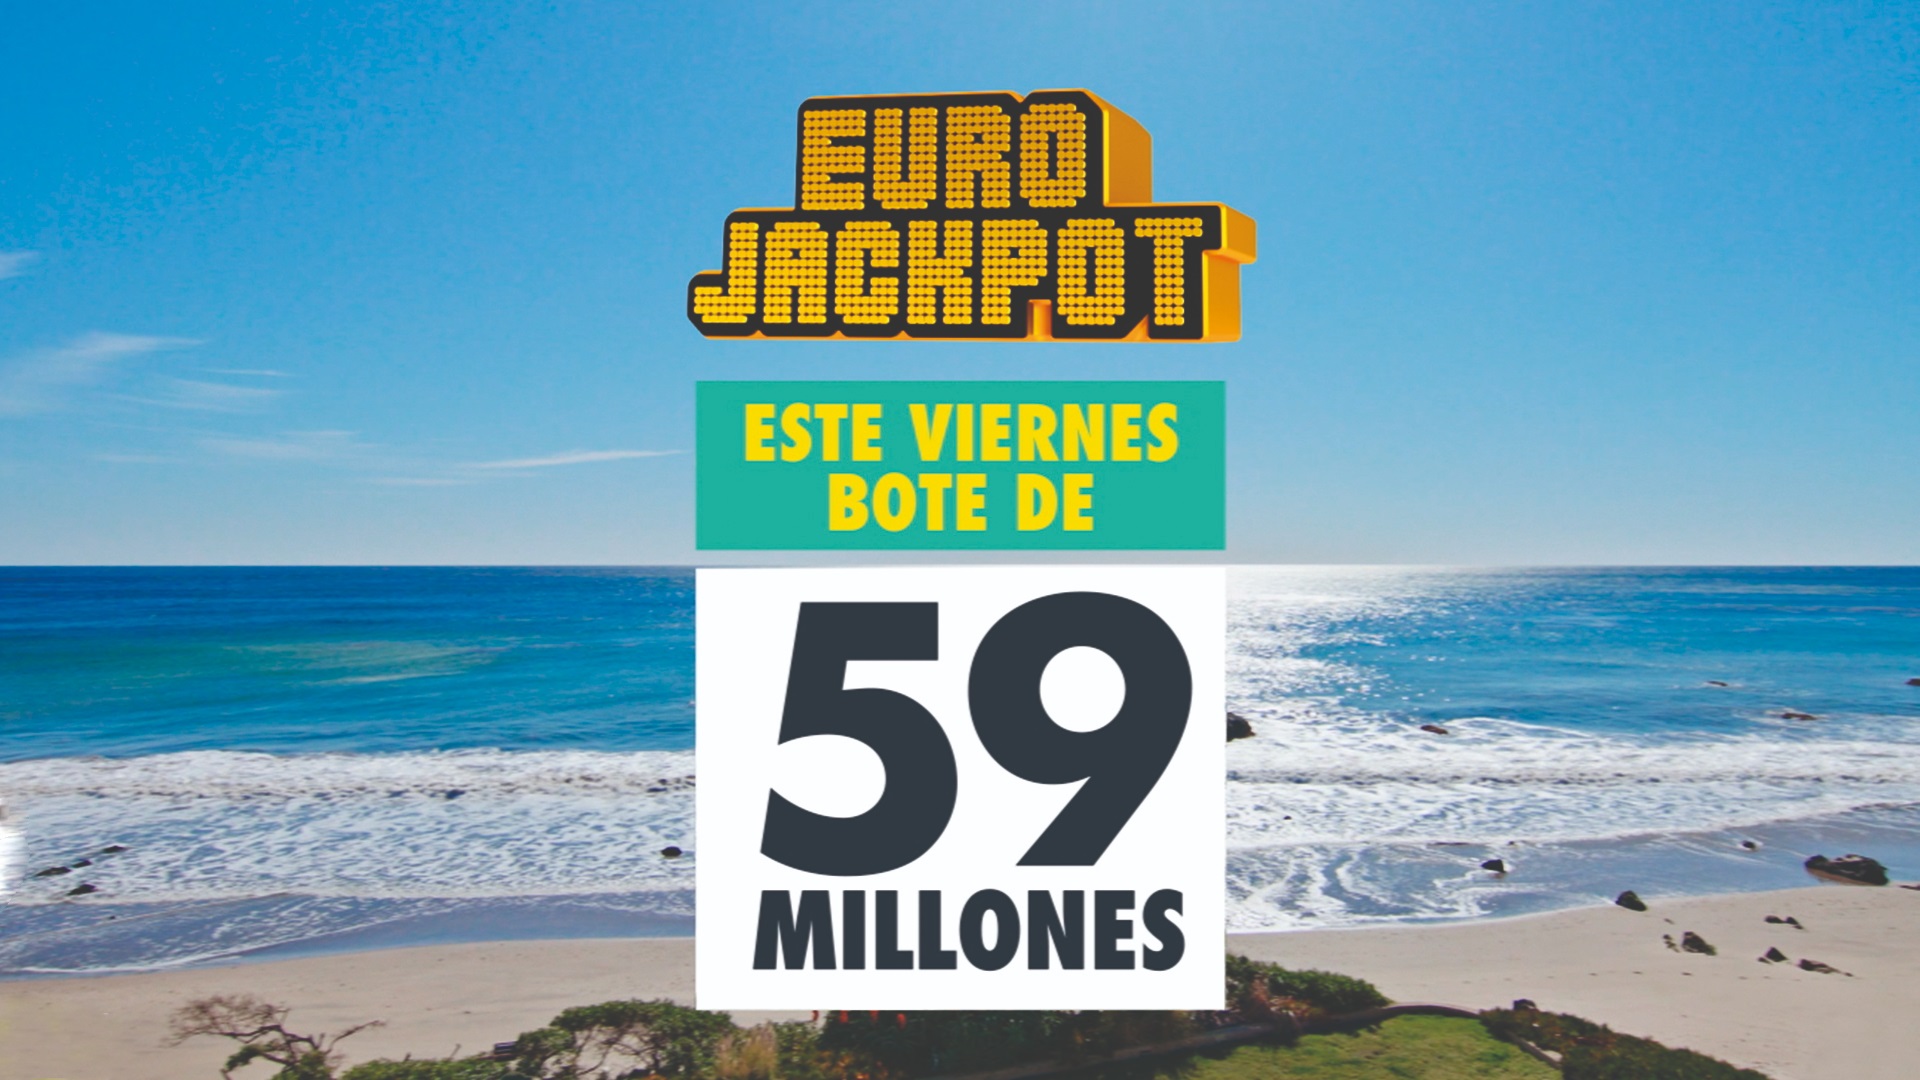 eurojackpot, once, playa, programapublicidad